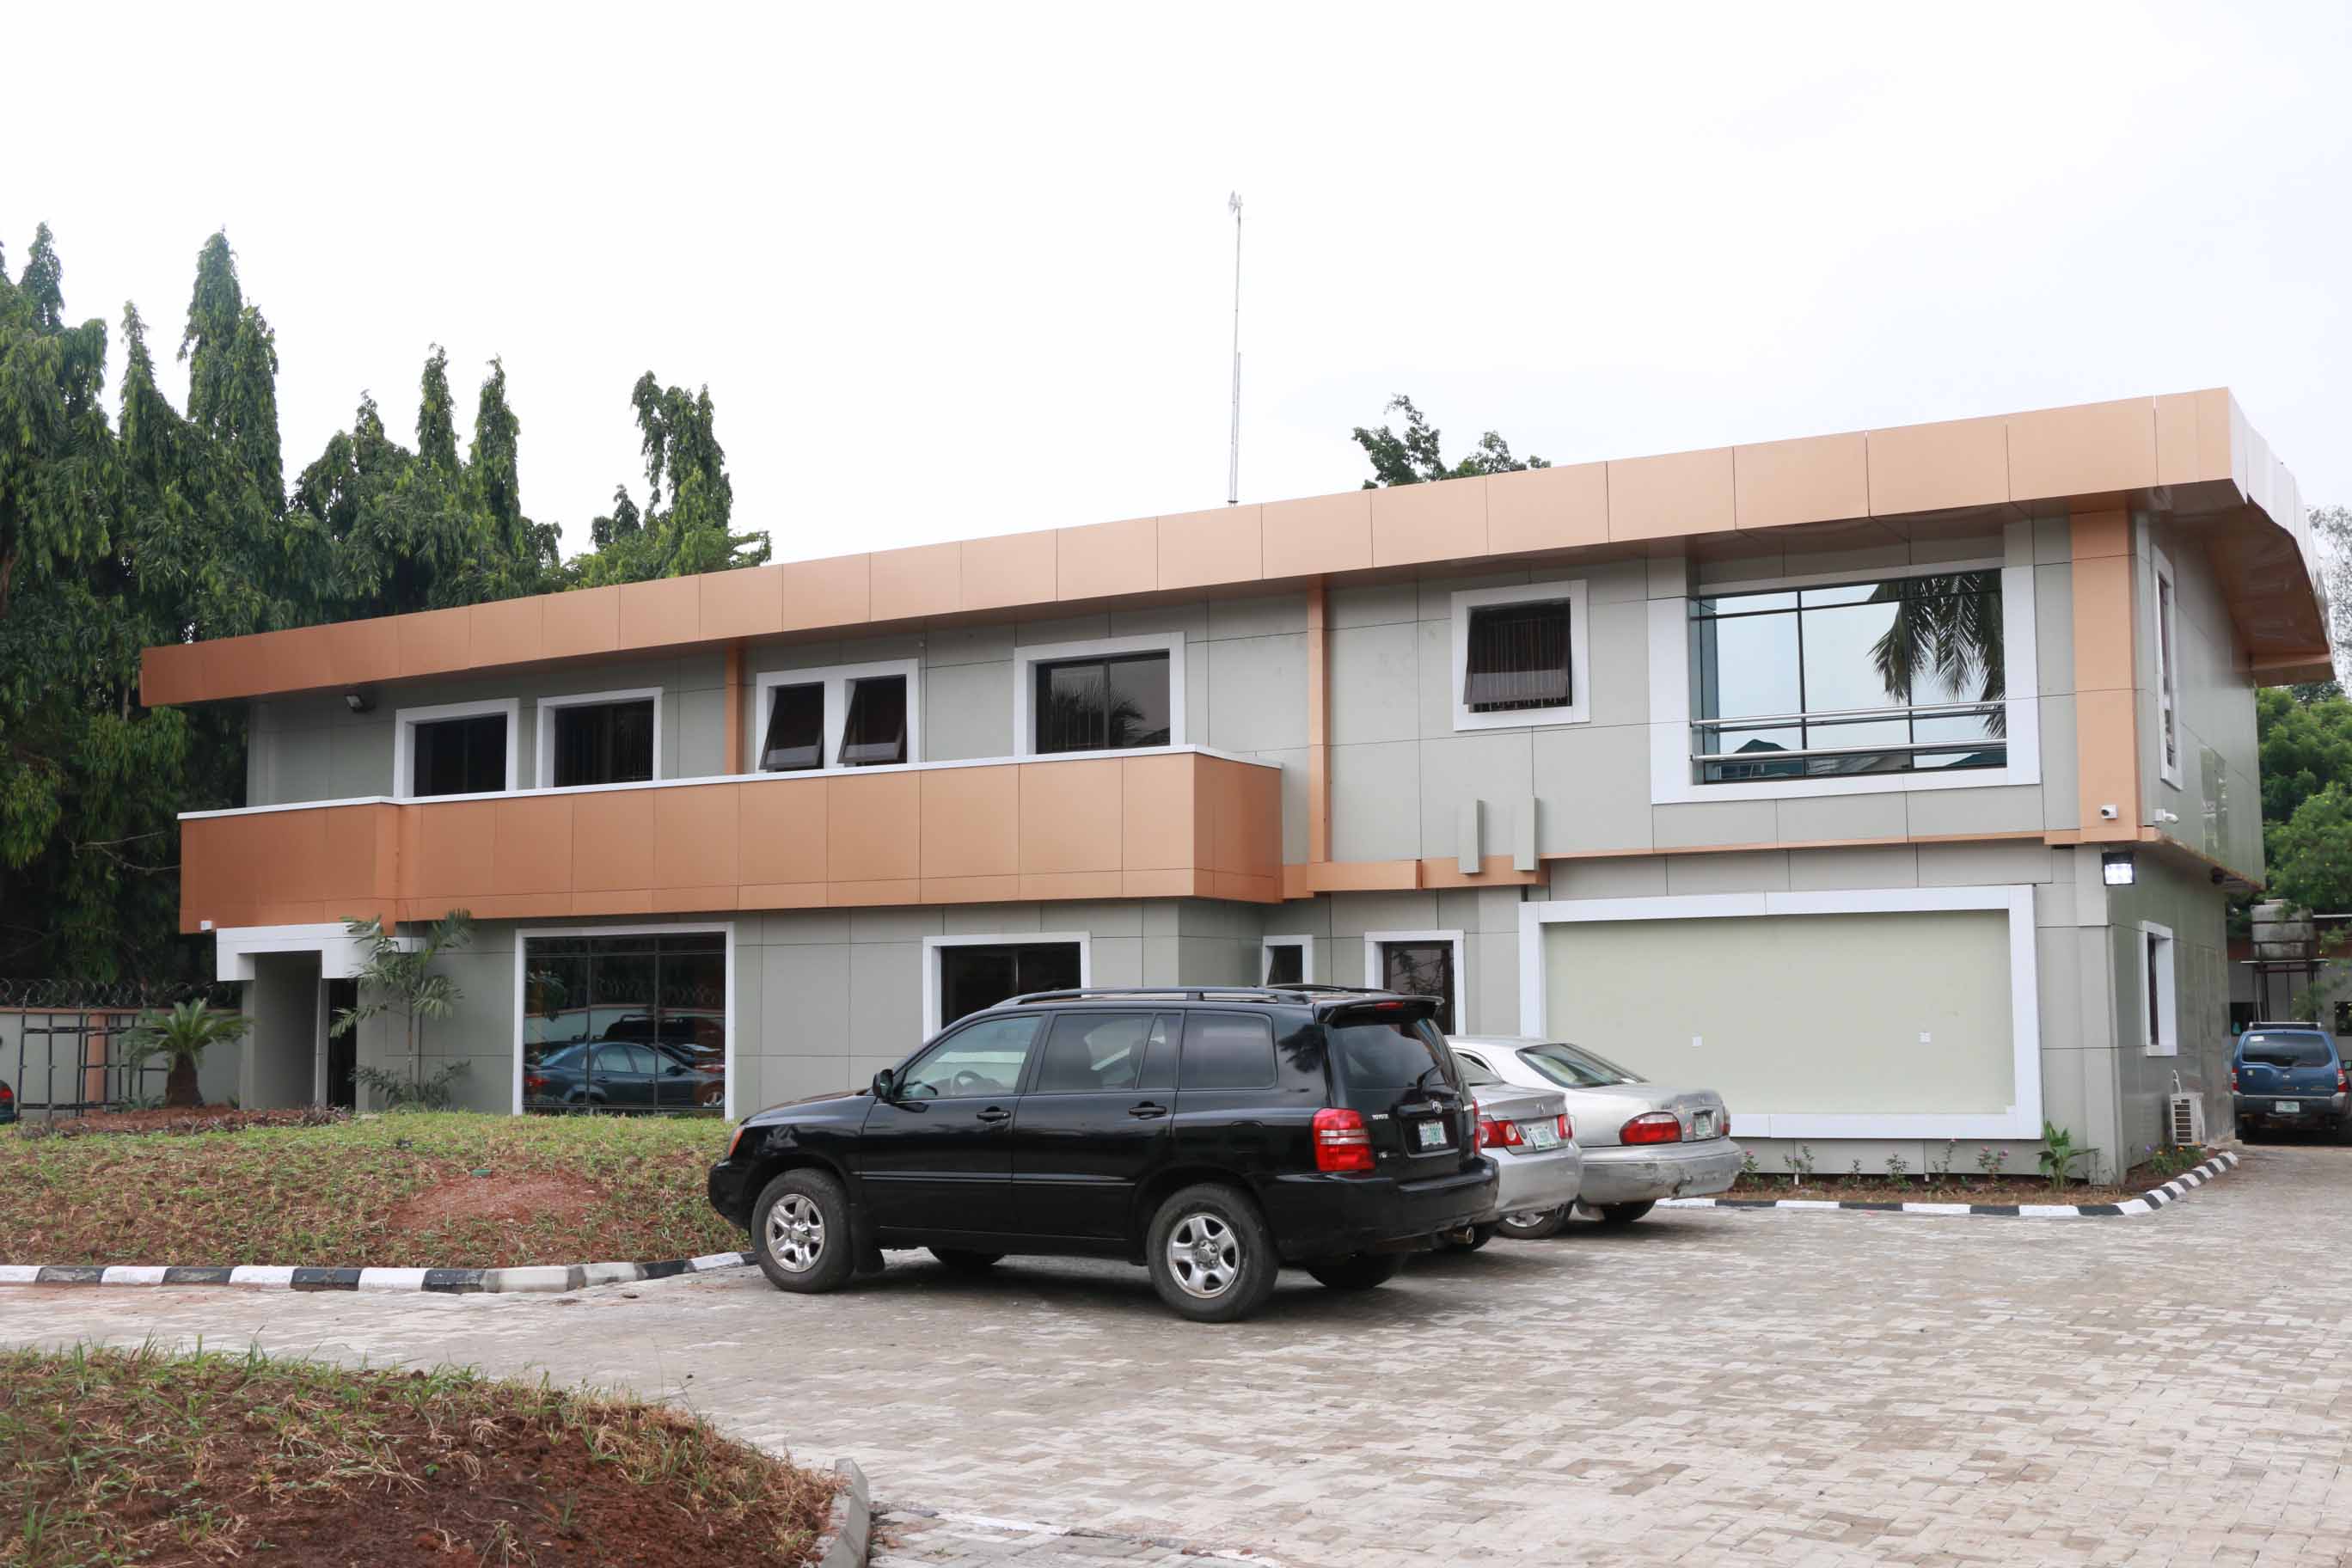 Noah's Ark New Office Complex at GRA-Ikeja, Lagos.